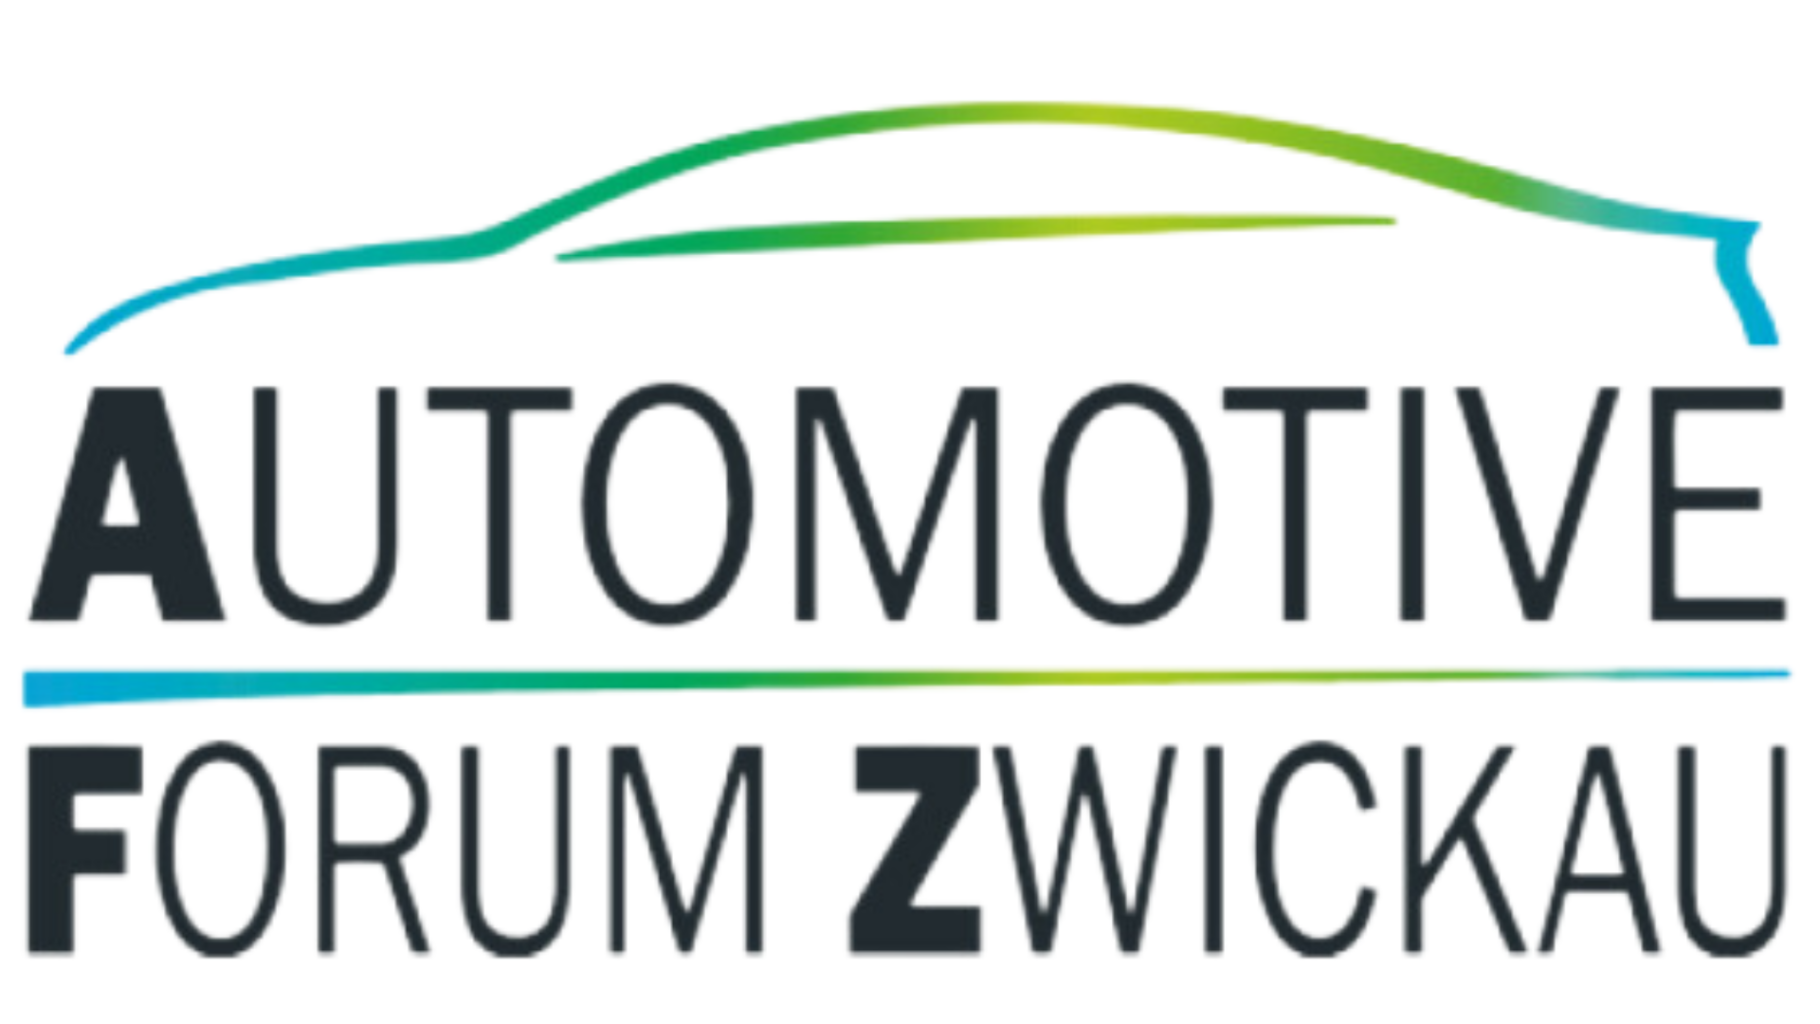 Automotive Forum Zwickau Header Logo